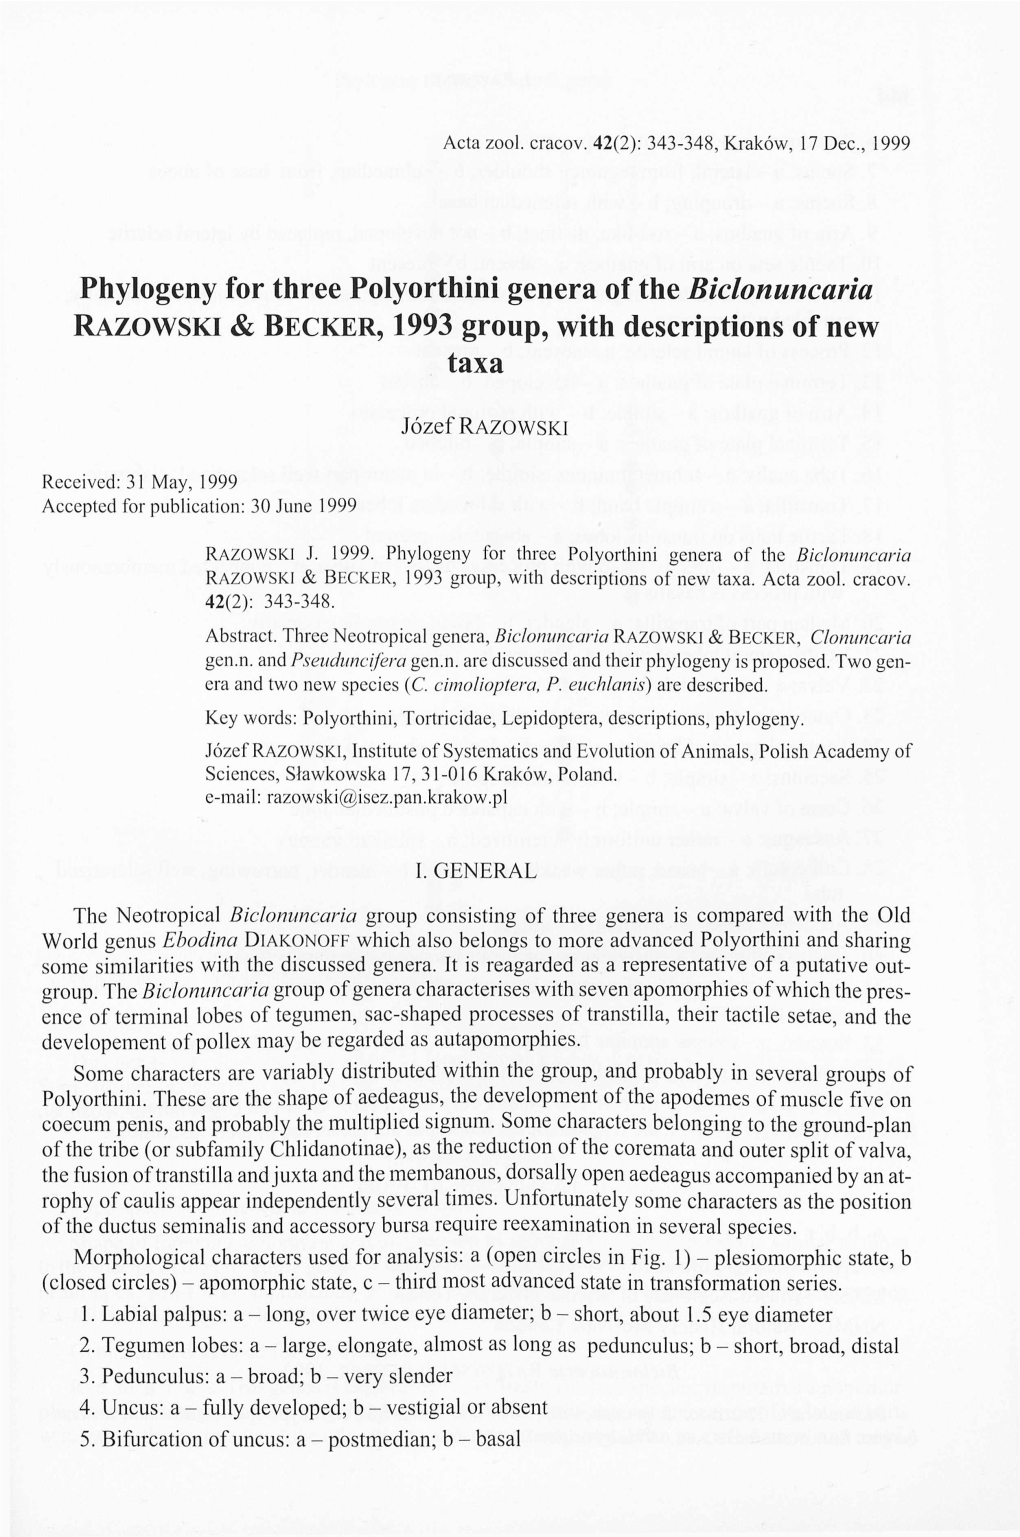 Phylogeny for Three Polyorthini Genera of the Biclonuncaria Razowski & Becker, 1993 Group, with Descriptions of New Taxa